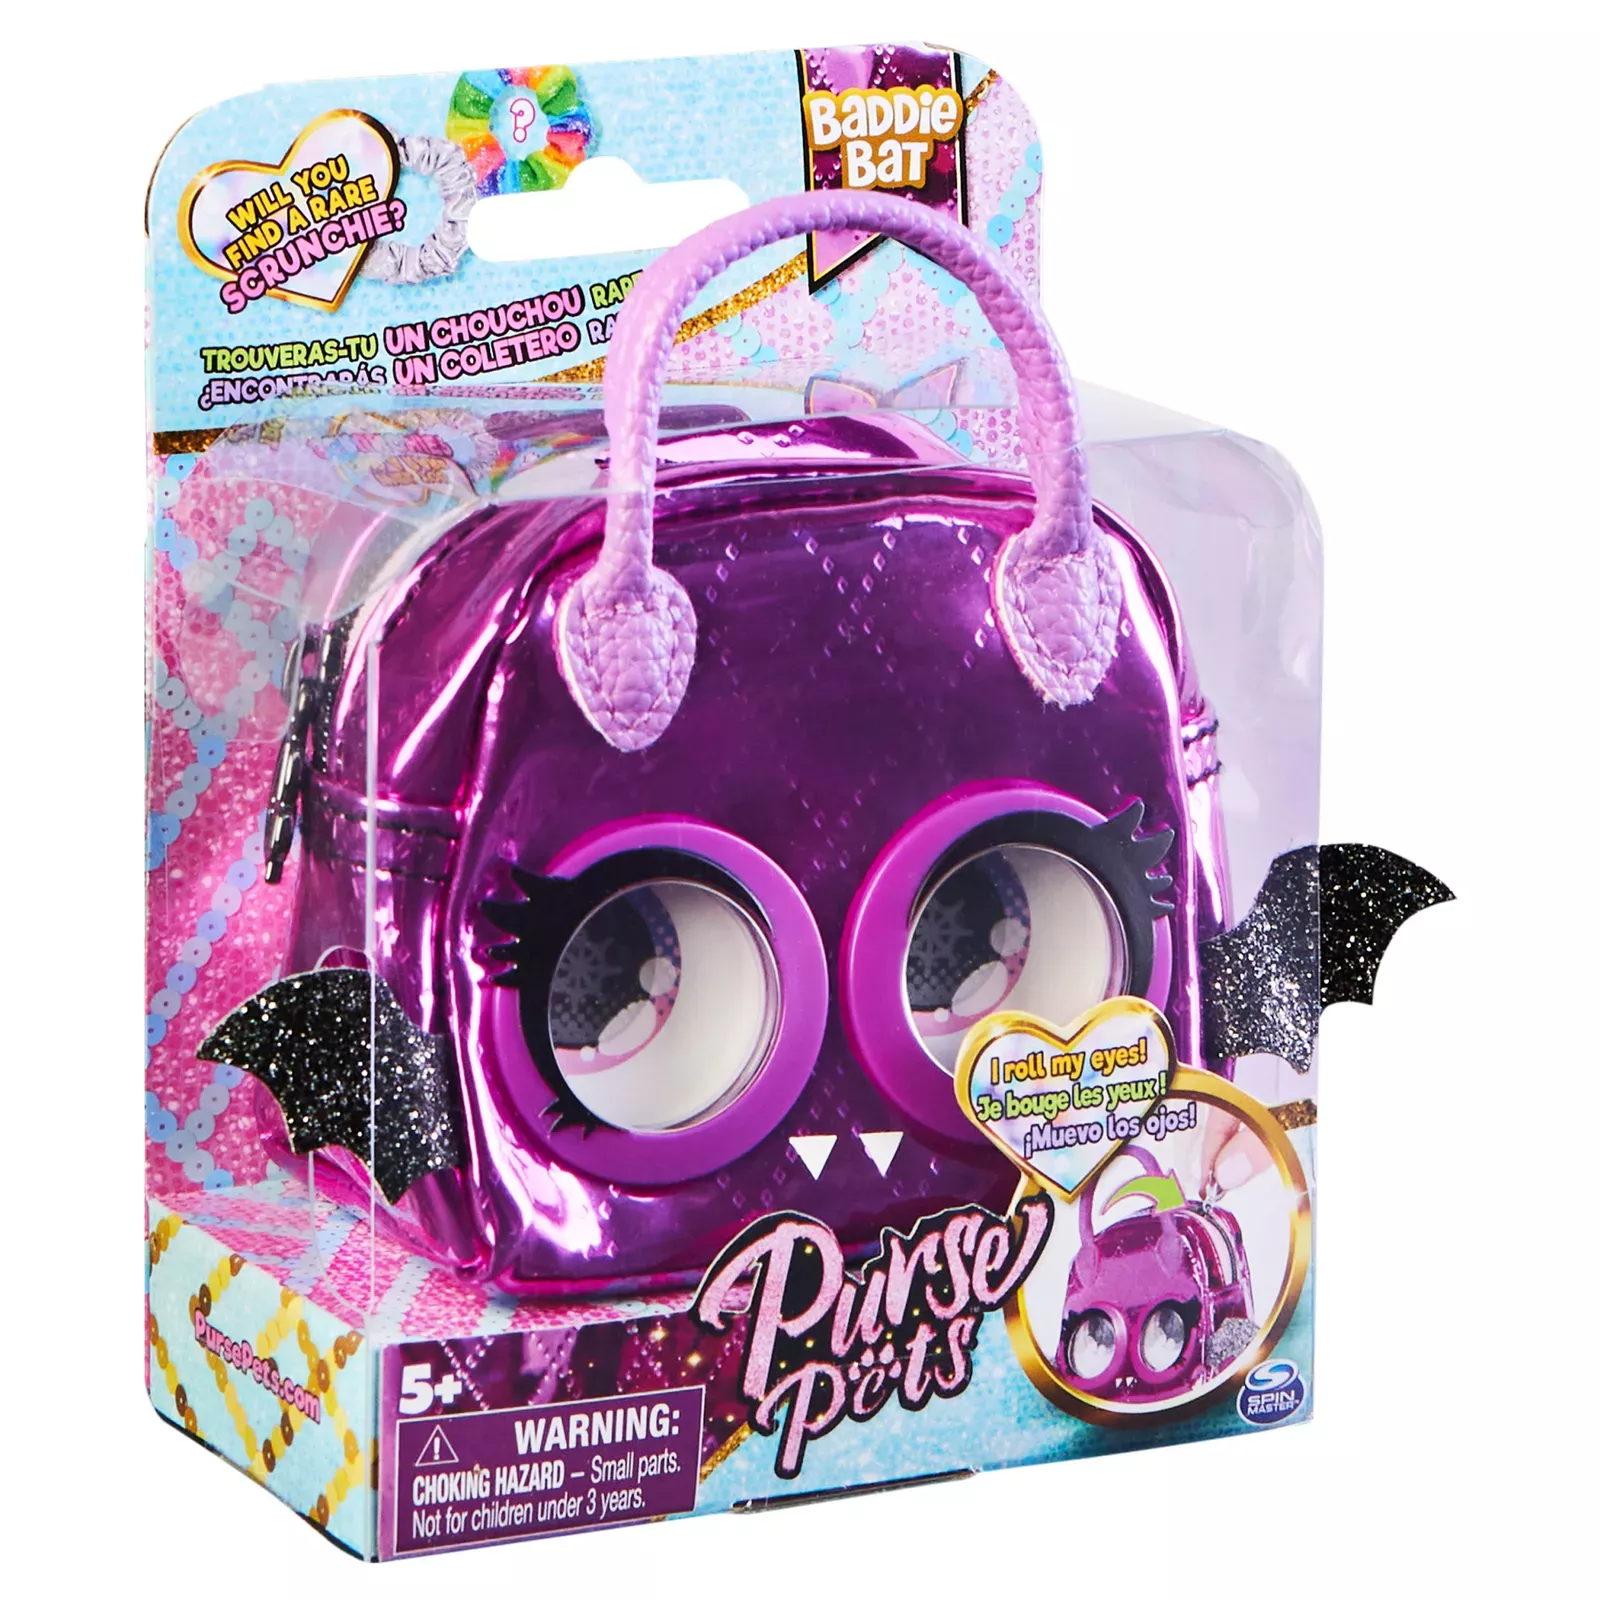 Purse Pets Micros, Baddie Bat Mini Kids Purse with Eye Roll, Shoulder Bag  Crossbody Purse Accessories, Girls Coin Purse & Tween Gifts 